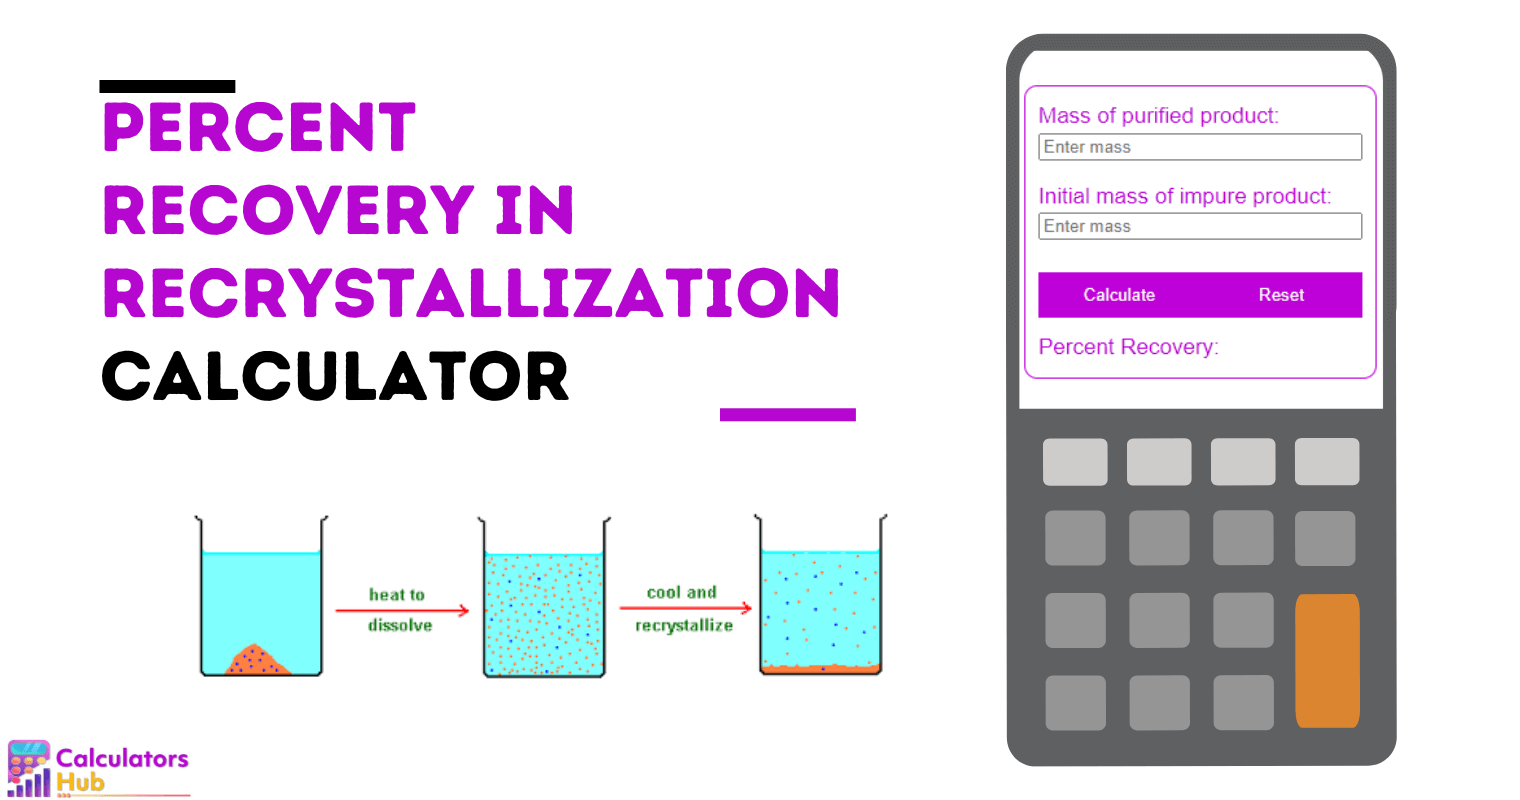 Percent Recovery in Recrystallization Calculator